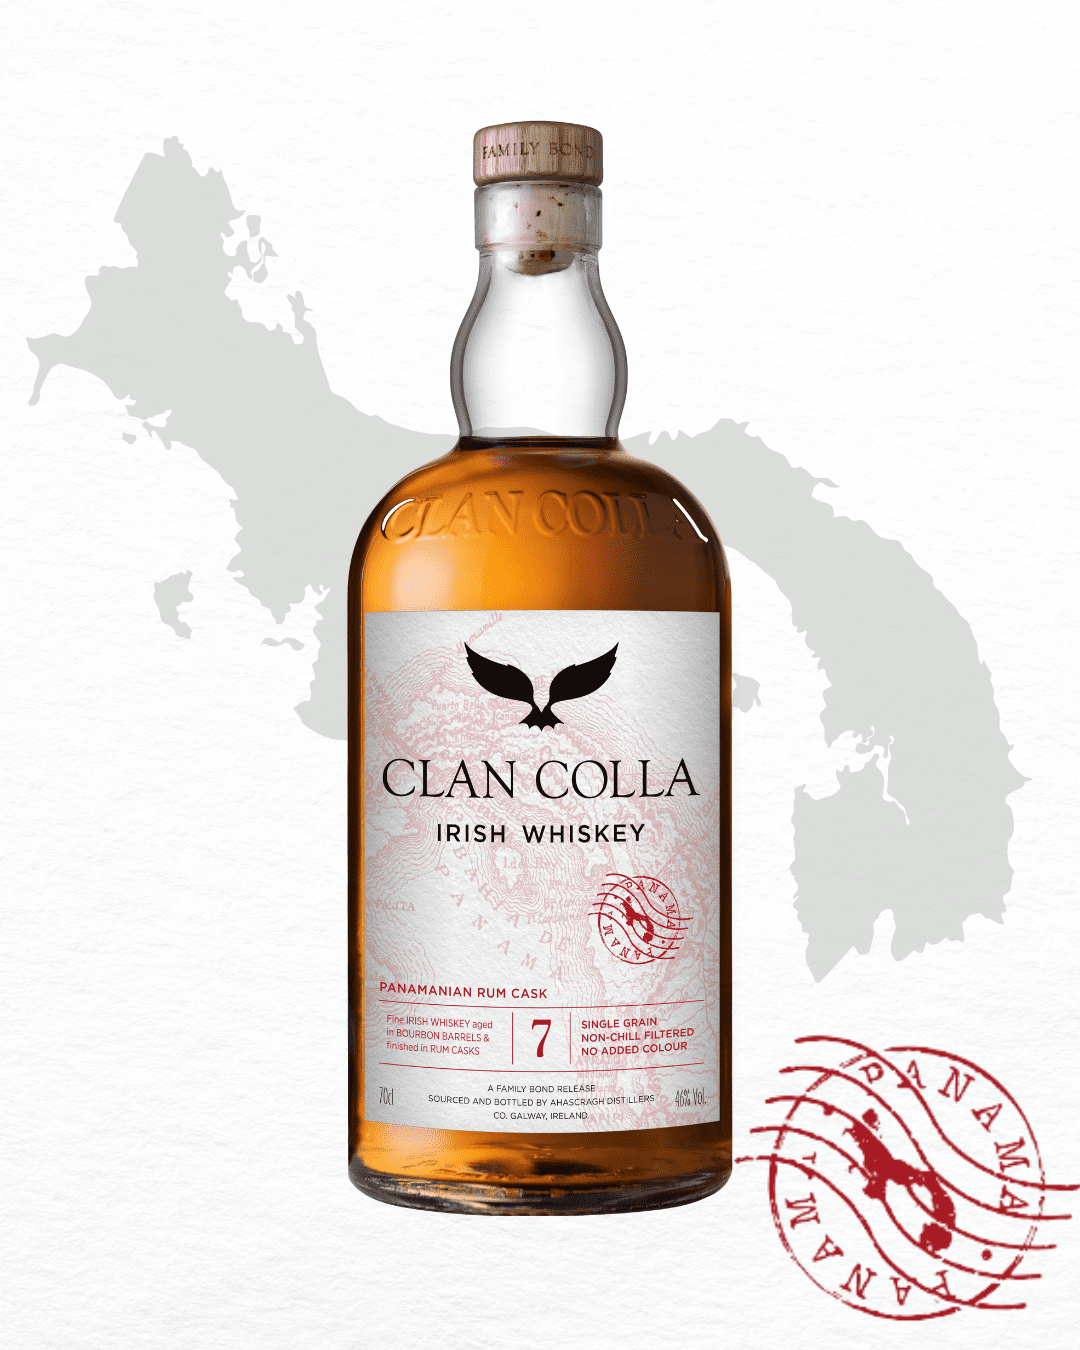 Clan Colla Irish Whiskey from Ahascragh. Seve Year Old Panama Rum Cask Finished Single Grain Irish Whiskey